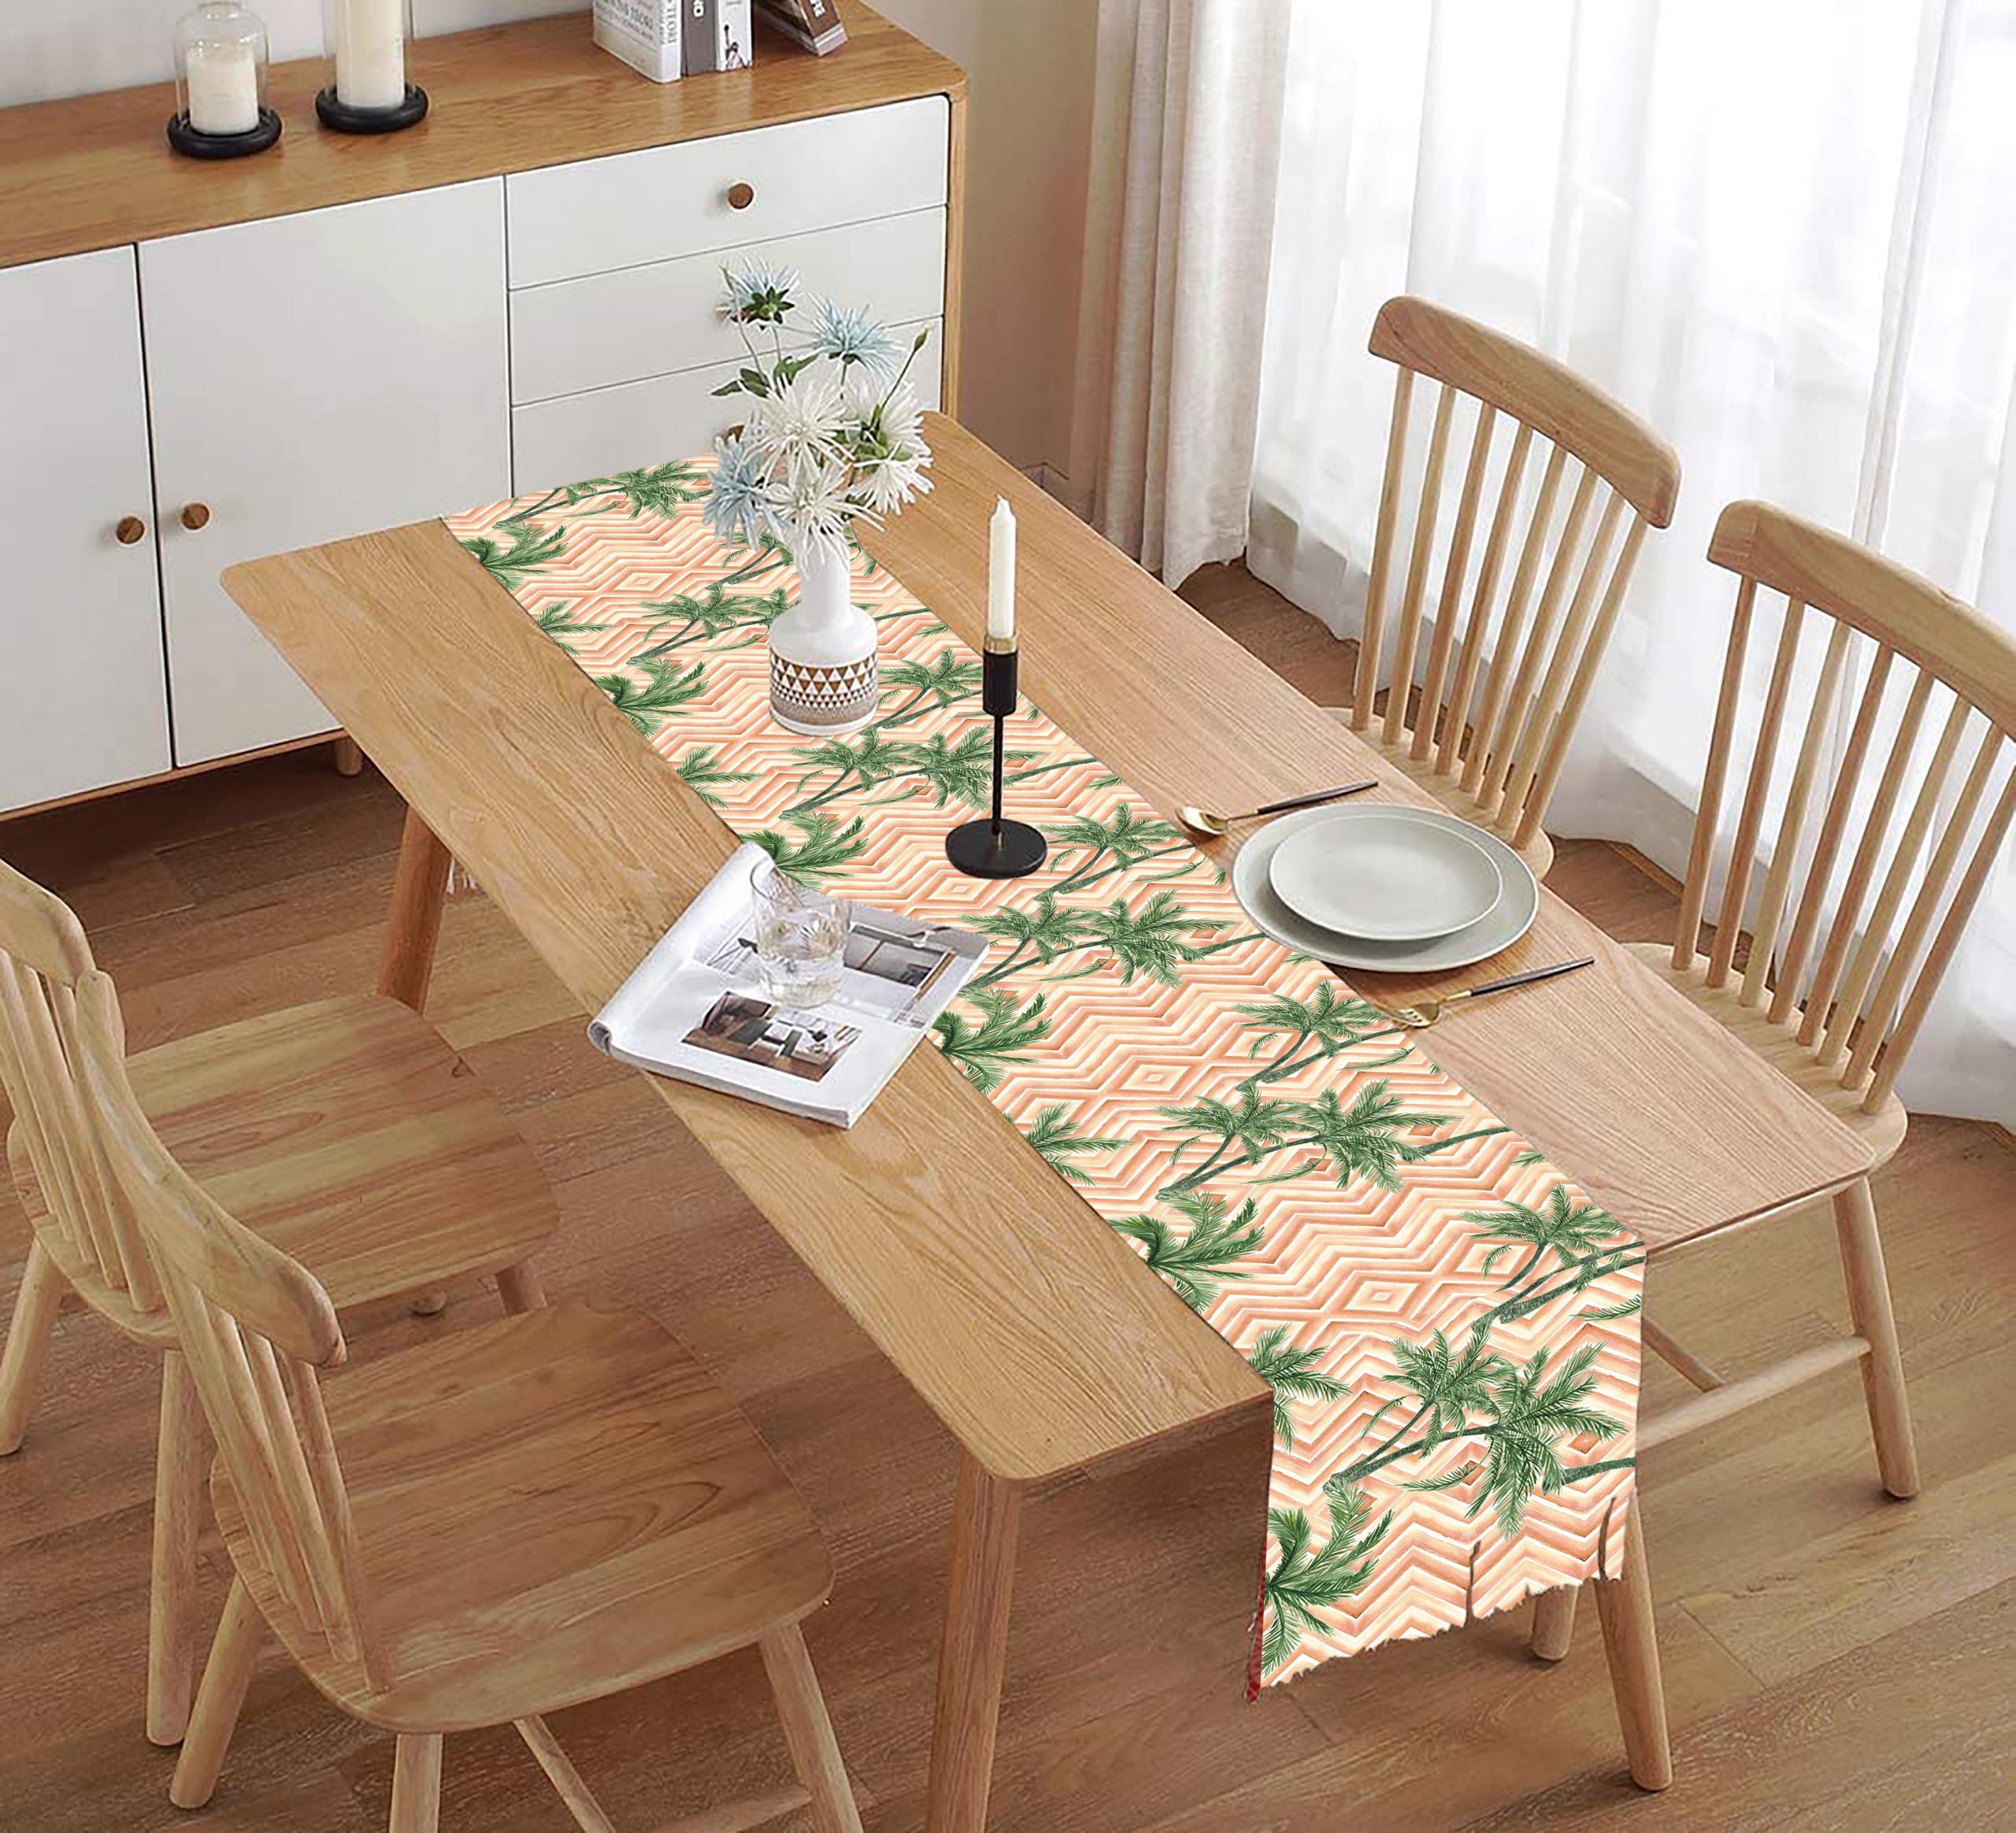 Homewards Tropical Palm Tree Design Table Runner